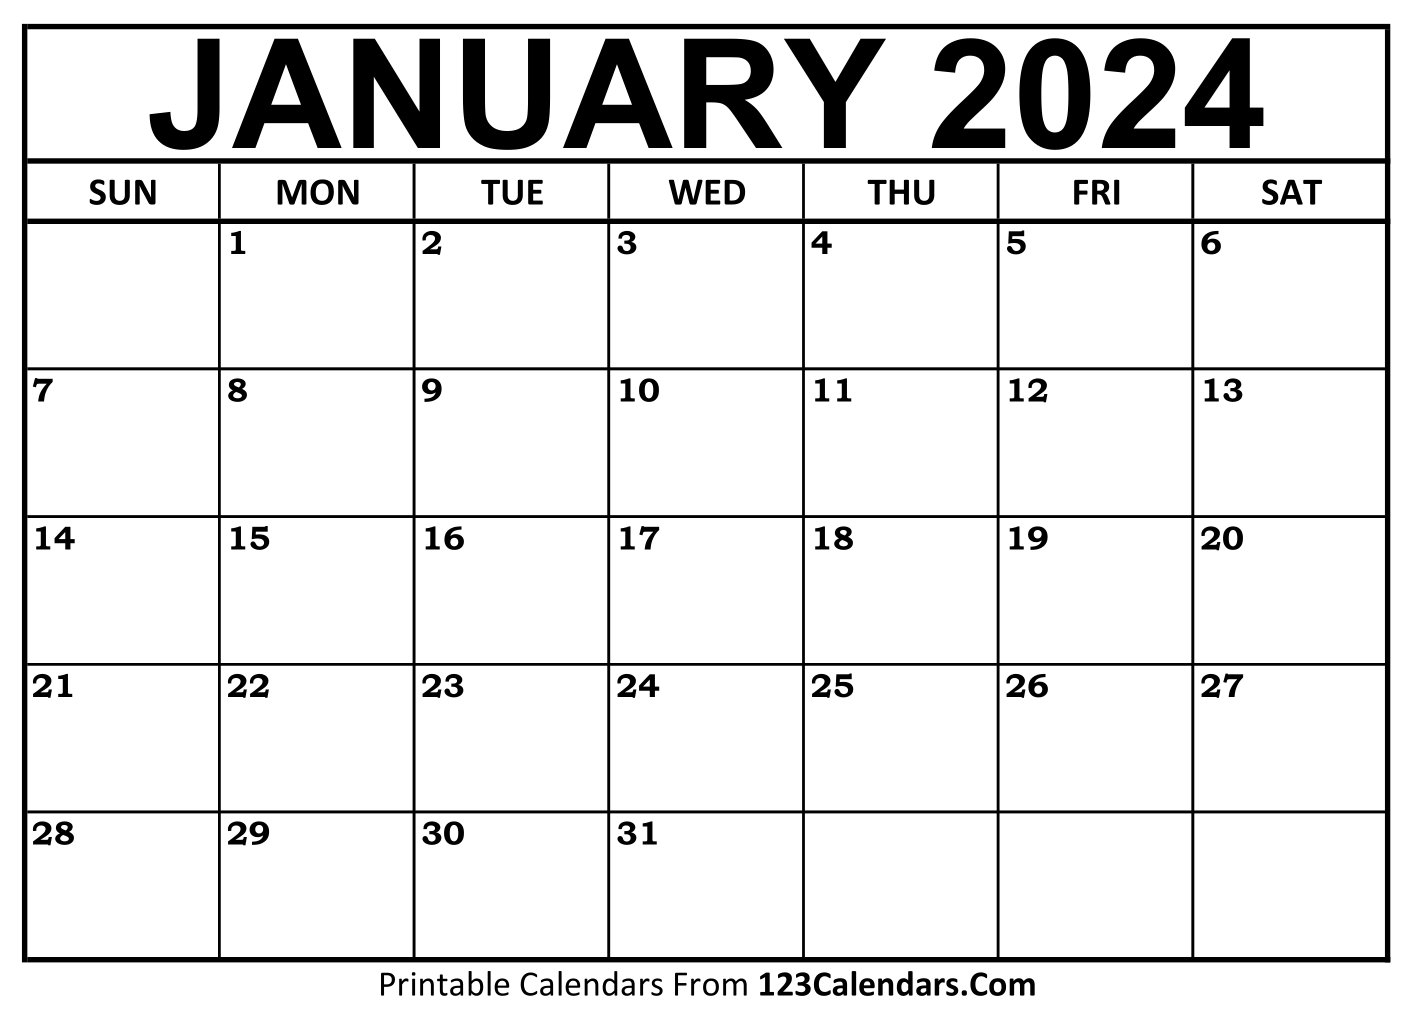 Printable January 2024 Calendar Templates - 123Calendars for January Calendar Free Printable 2024